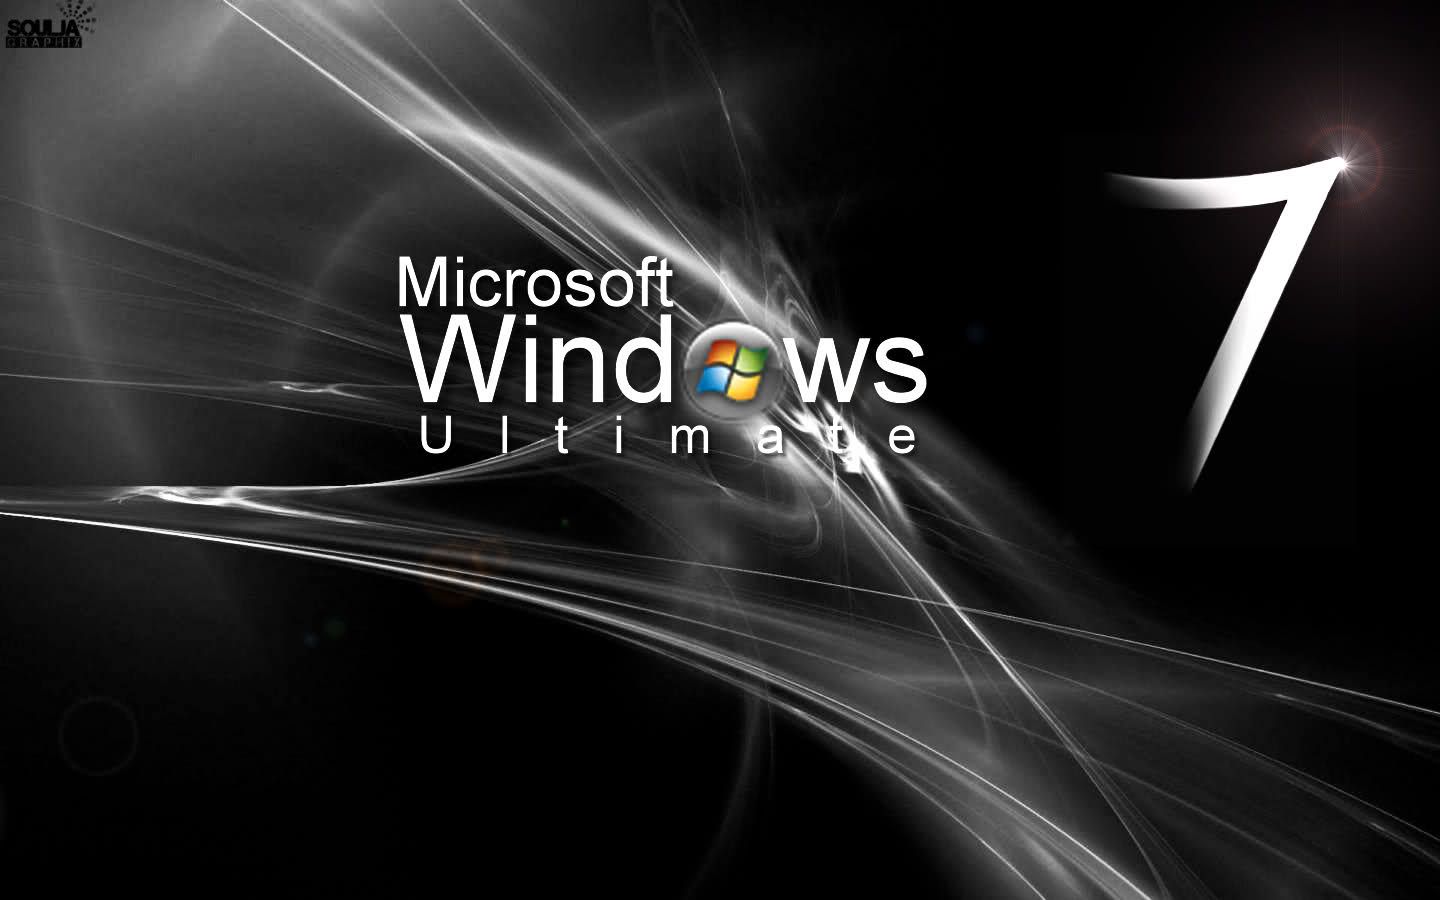 Custom Windows 7 Wallpapers - - Windows 7 Help Forums